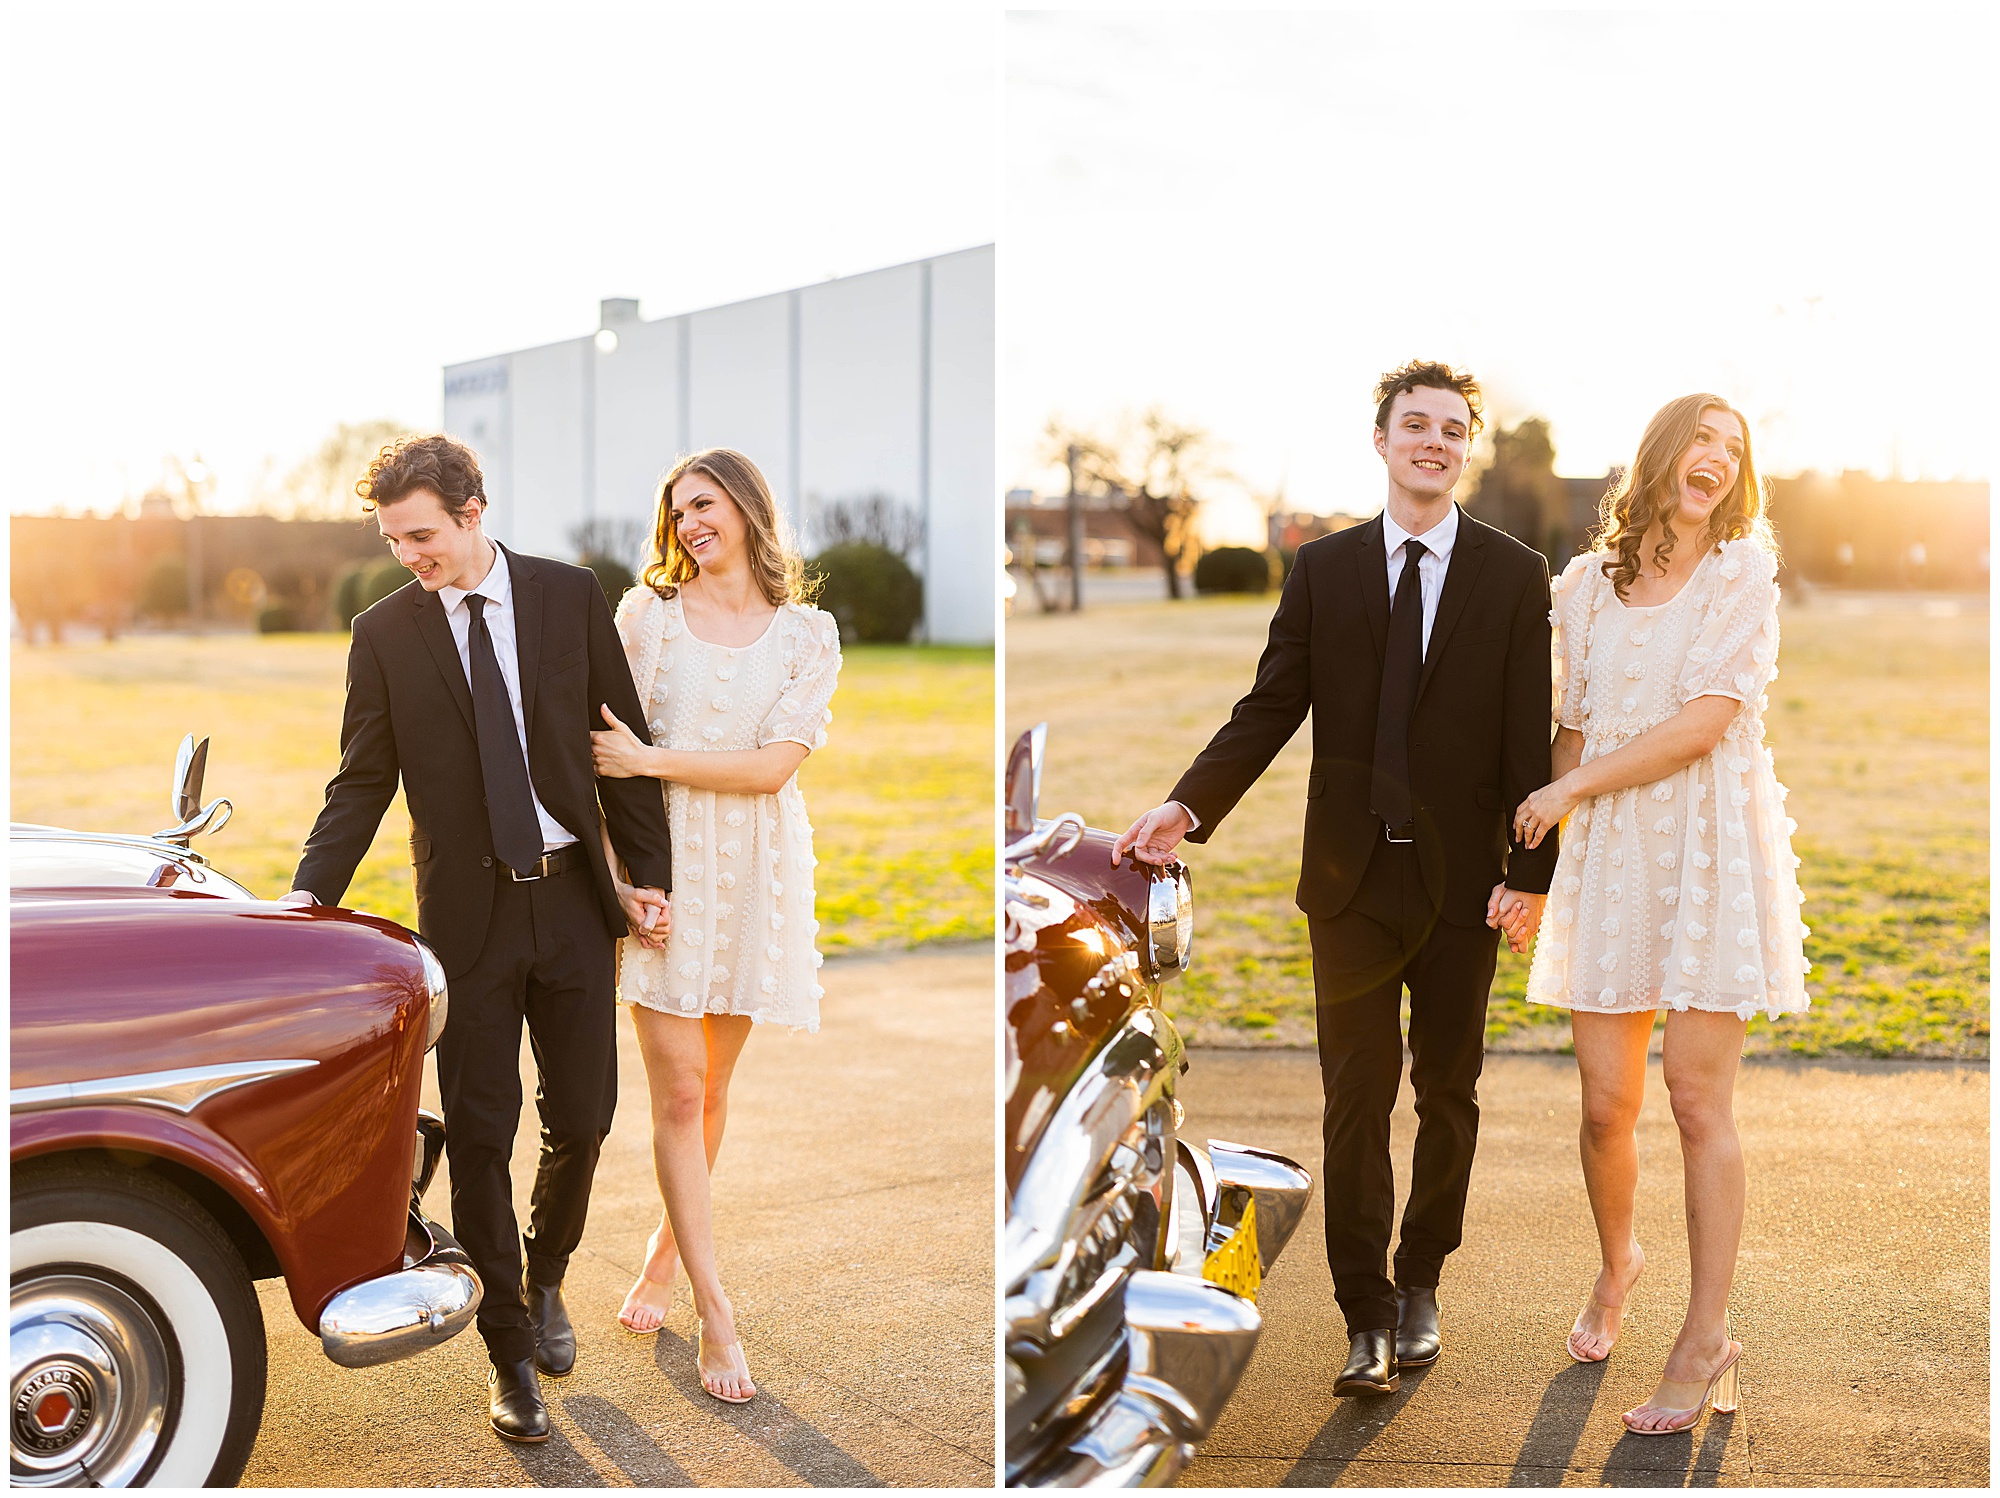 Eleanor Stenner Photography - a Birmingham, AL wedding photographer - photographs Rachel and Brandon, the winners of her Valentine's Day Photoshoot